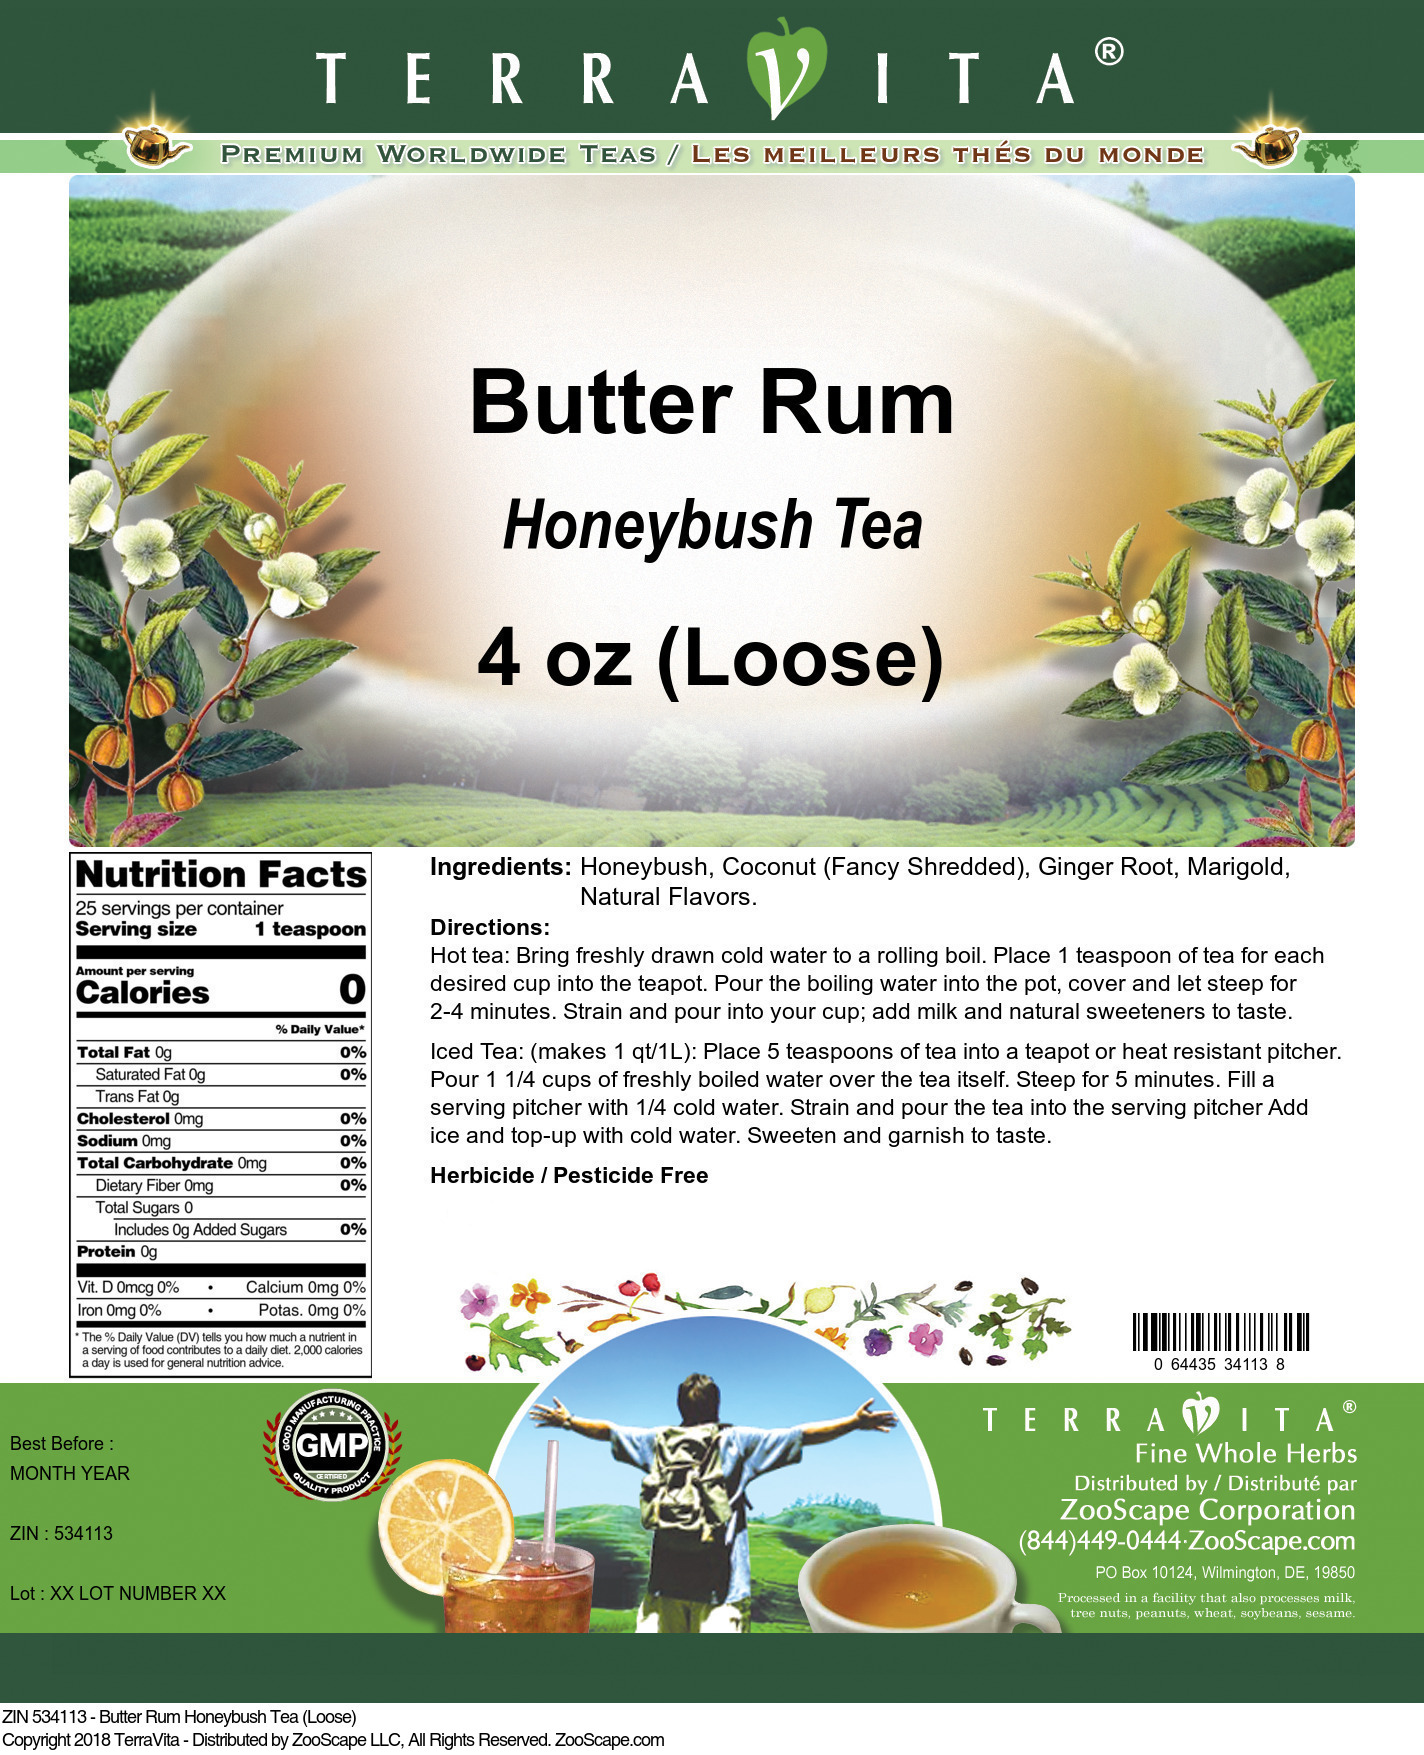 Butter Rum Honeybush Tea (Loose) - Label